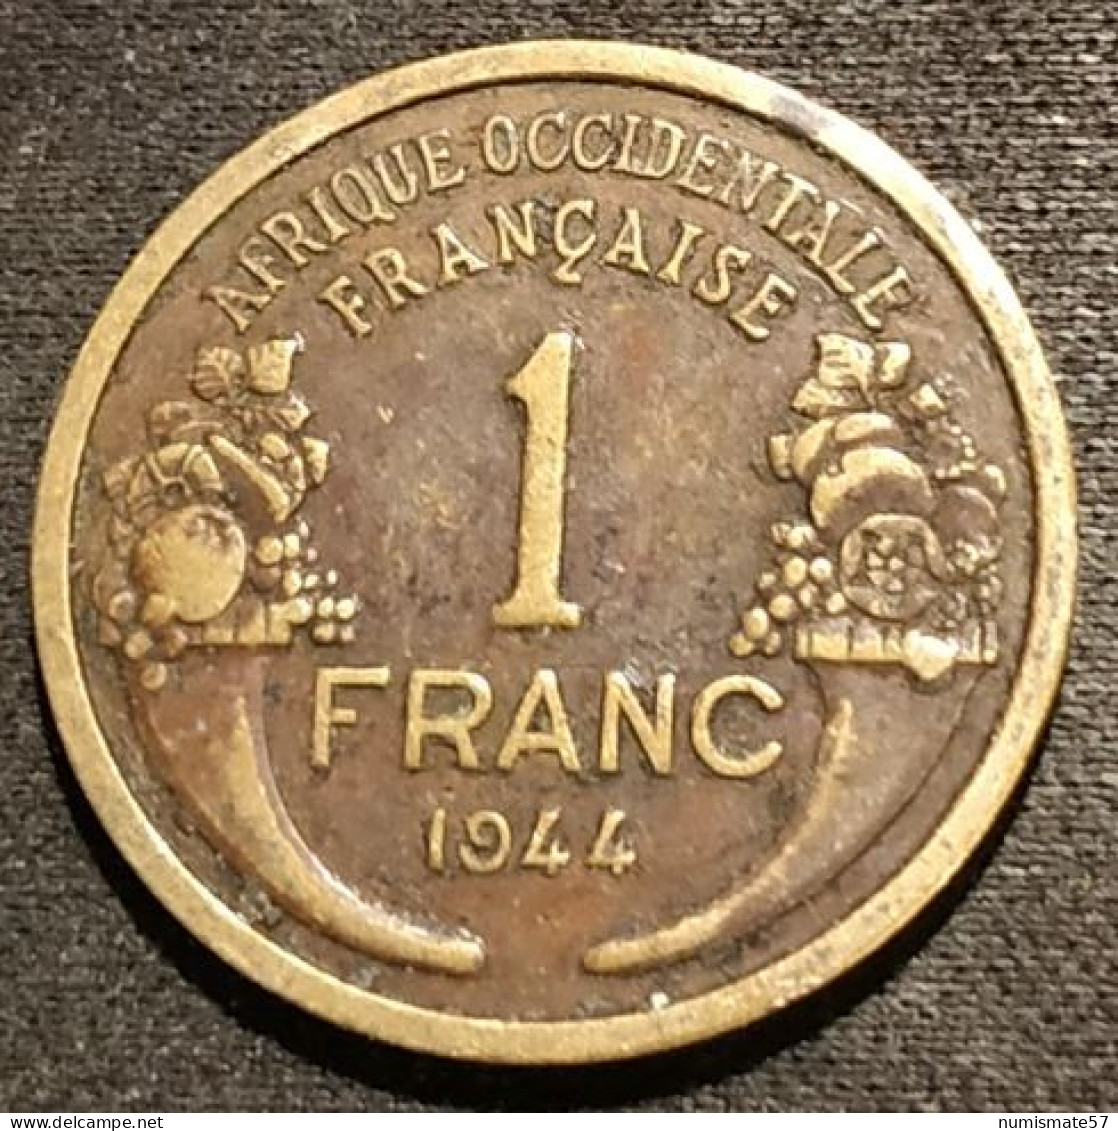 AFRIQUE OCCIDENTALE FRANÇAISE - 1 FRANC 1944 - Morlon - KM 2 - África Occidental Francesa